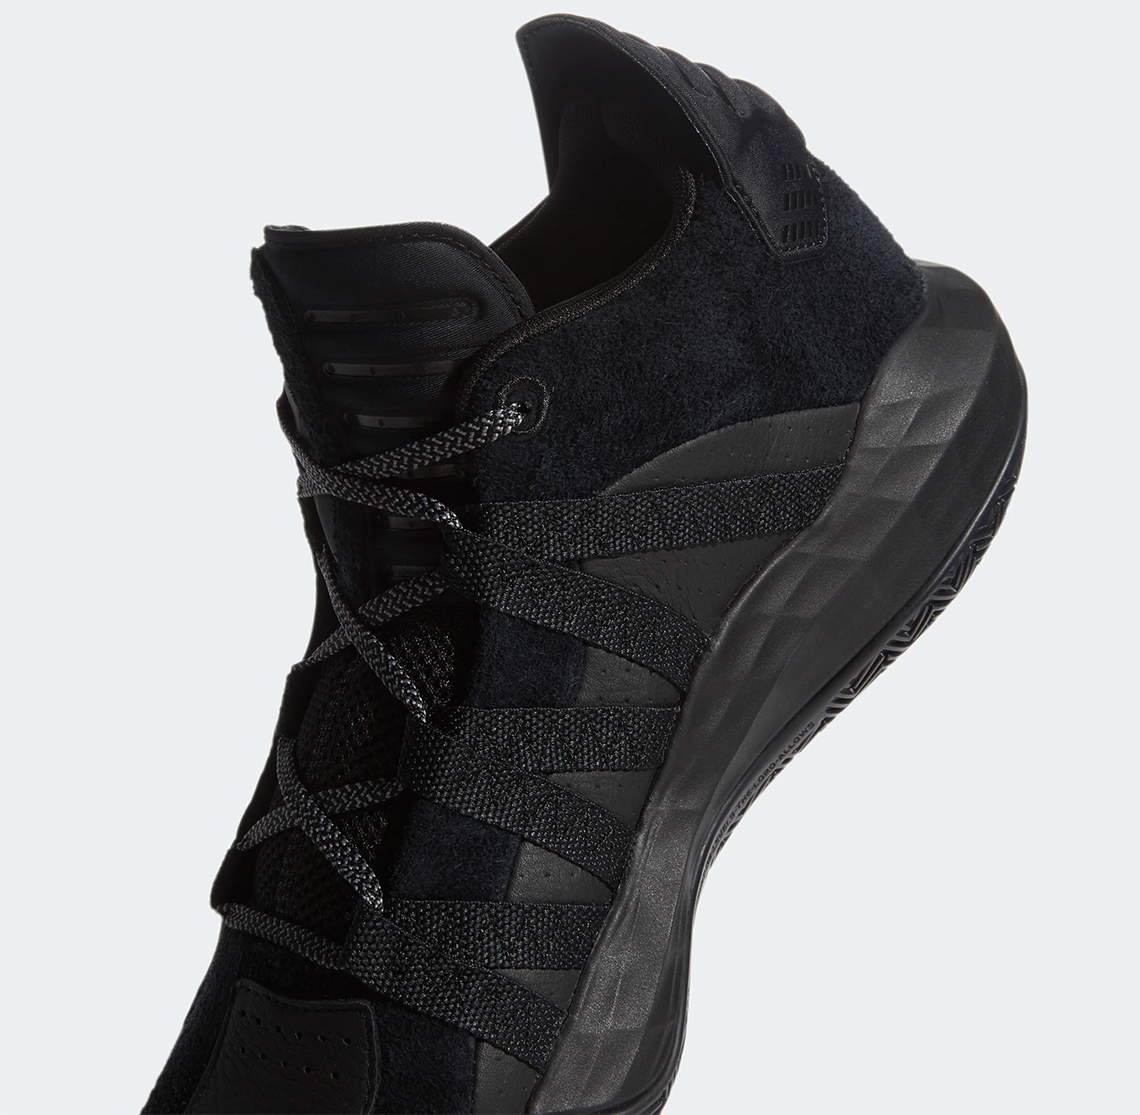 Adidas Dame 6 Core Black Fv8627 1